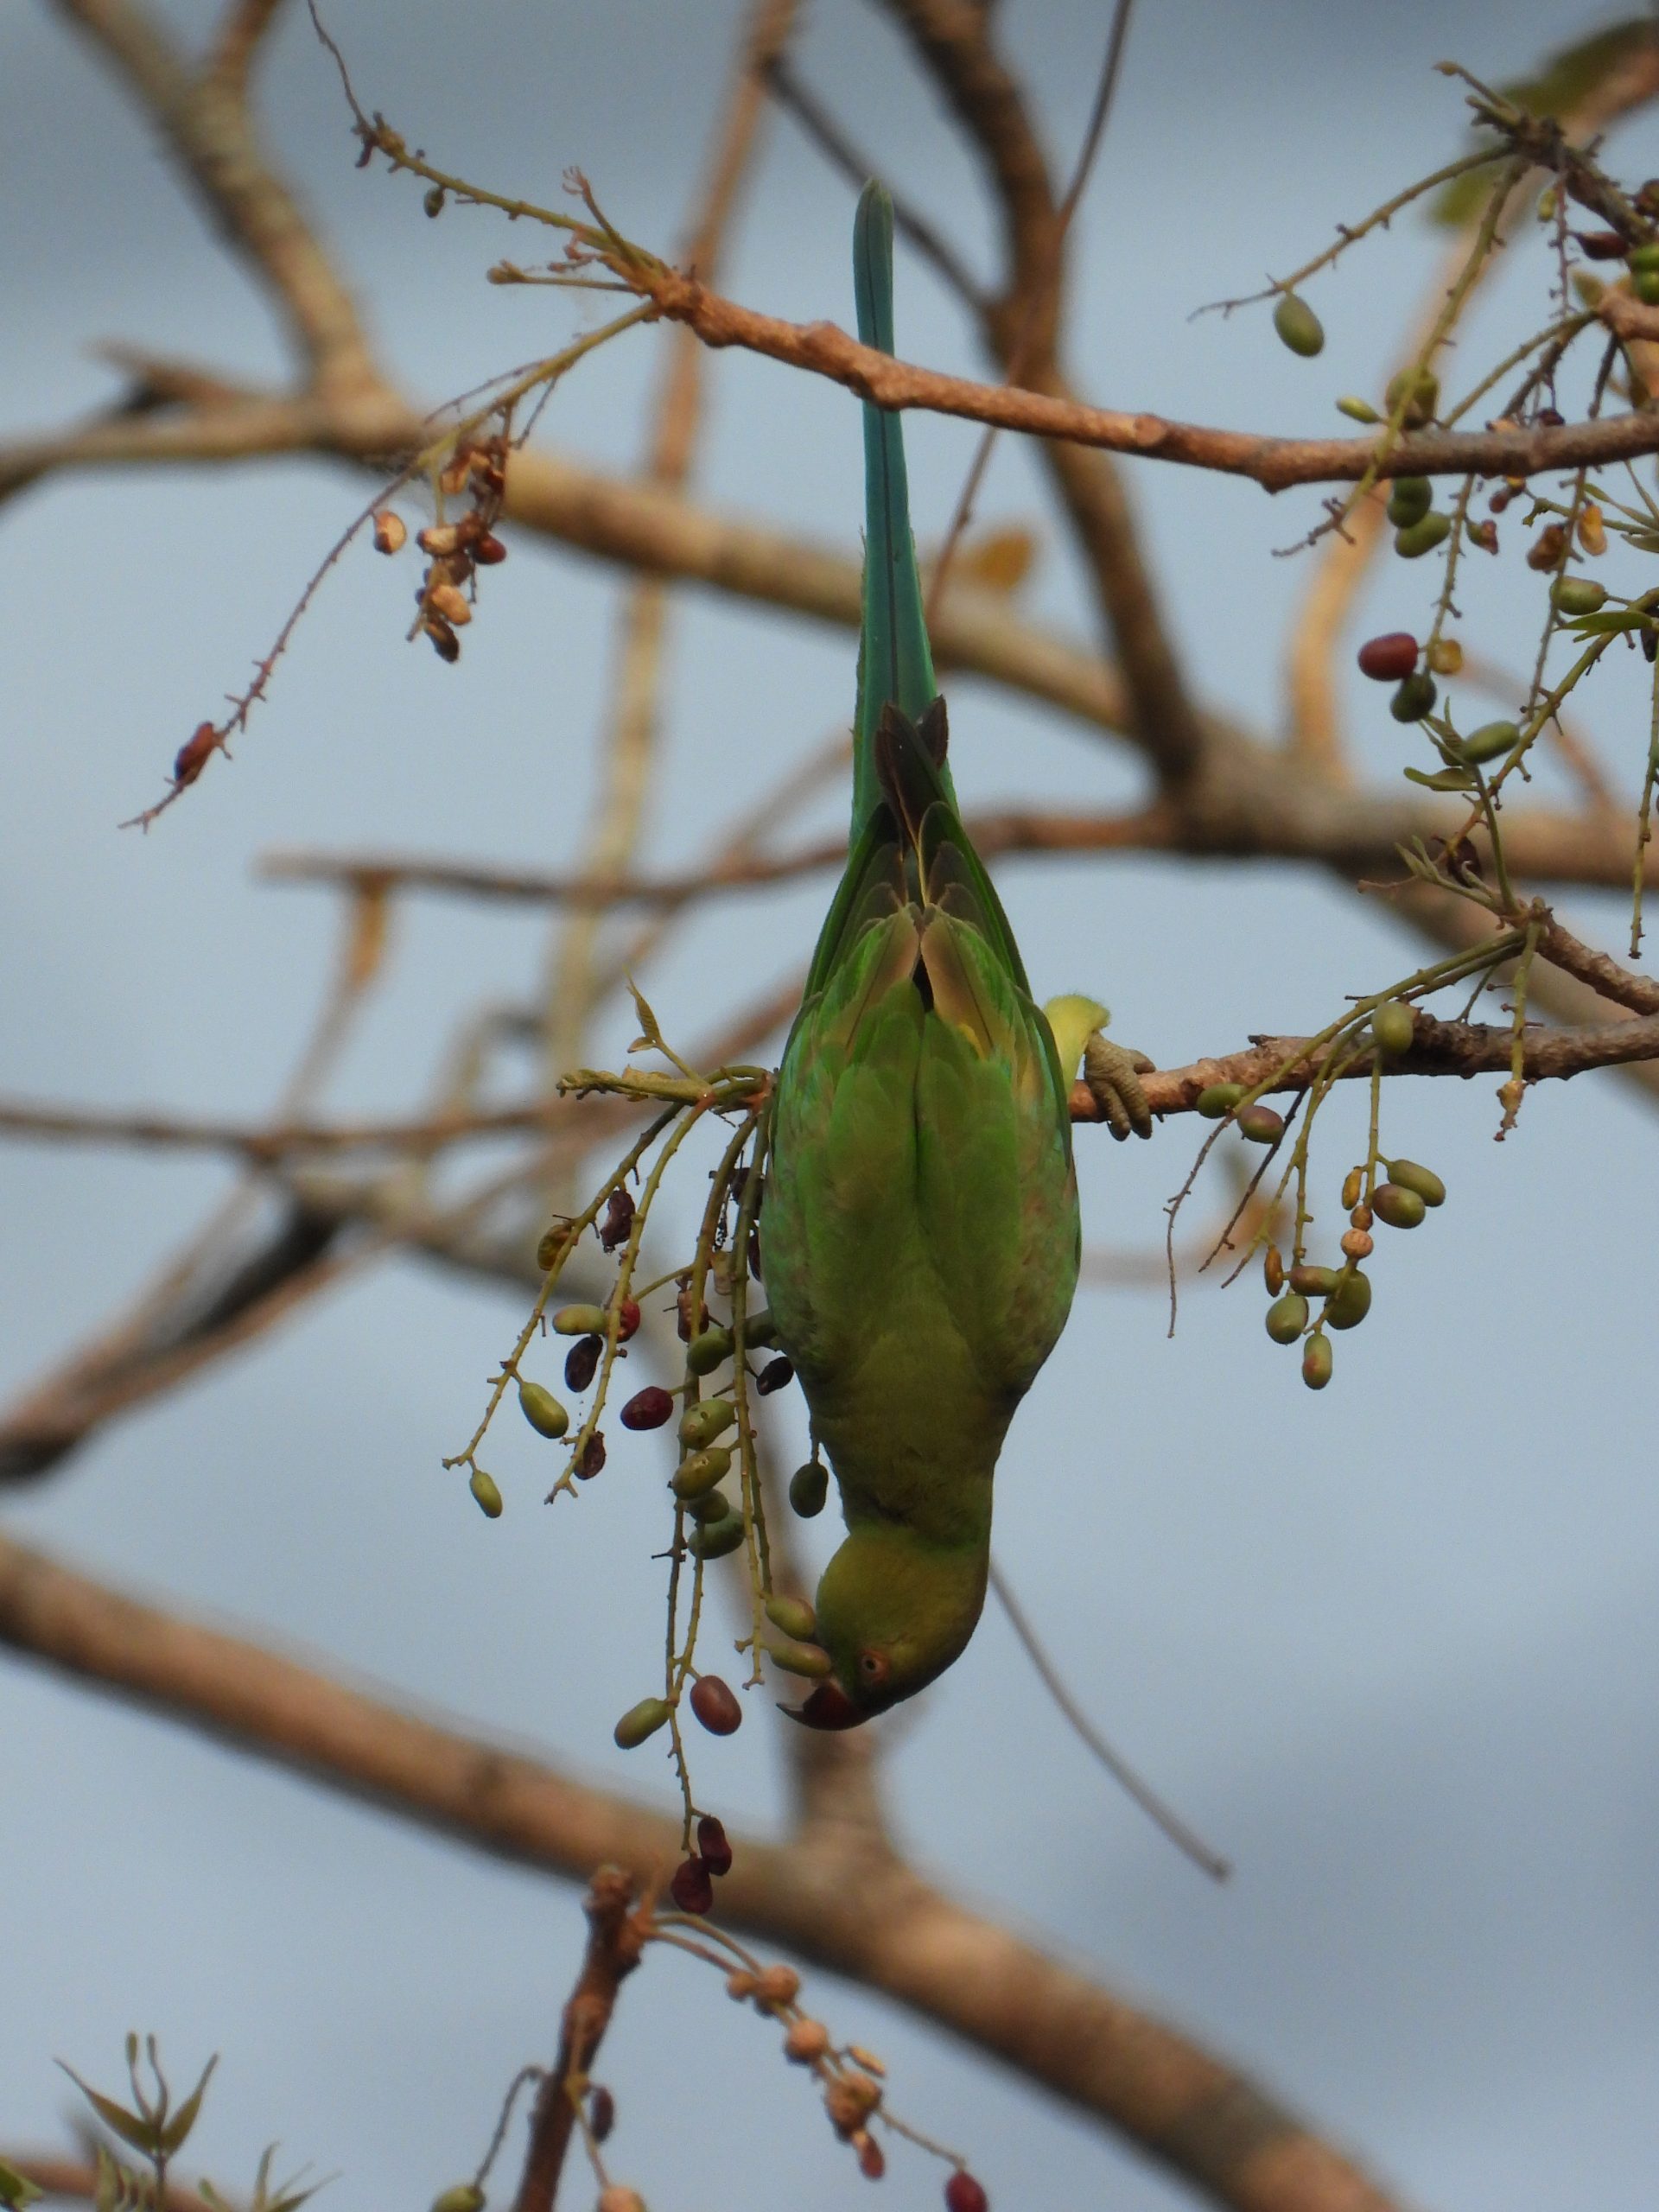 Parrot on tree